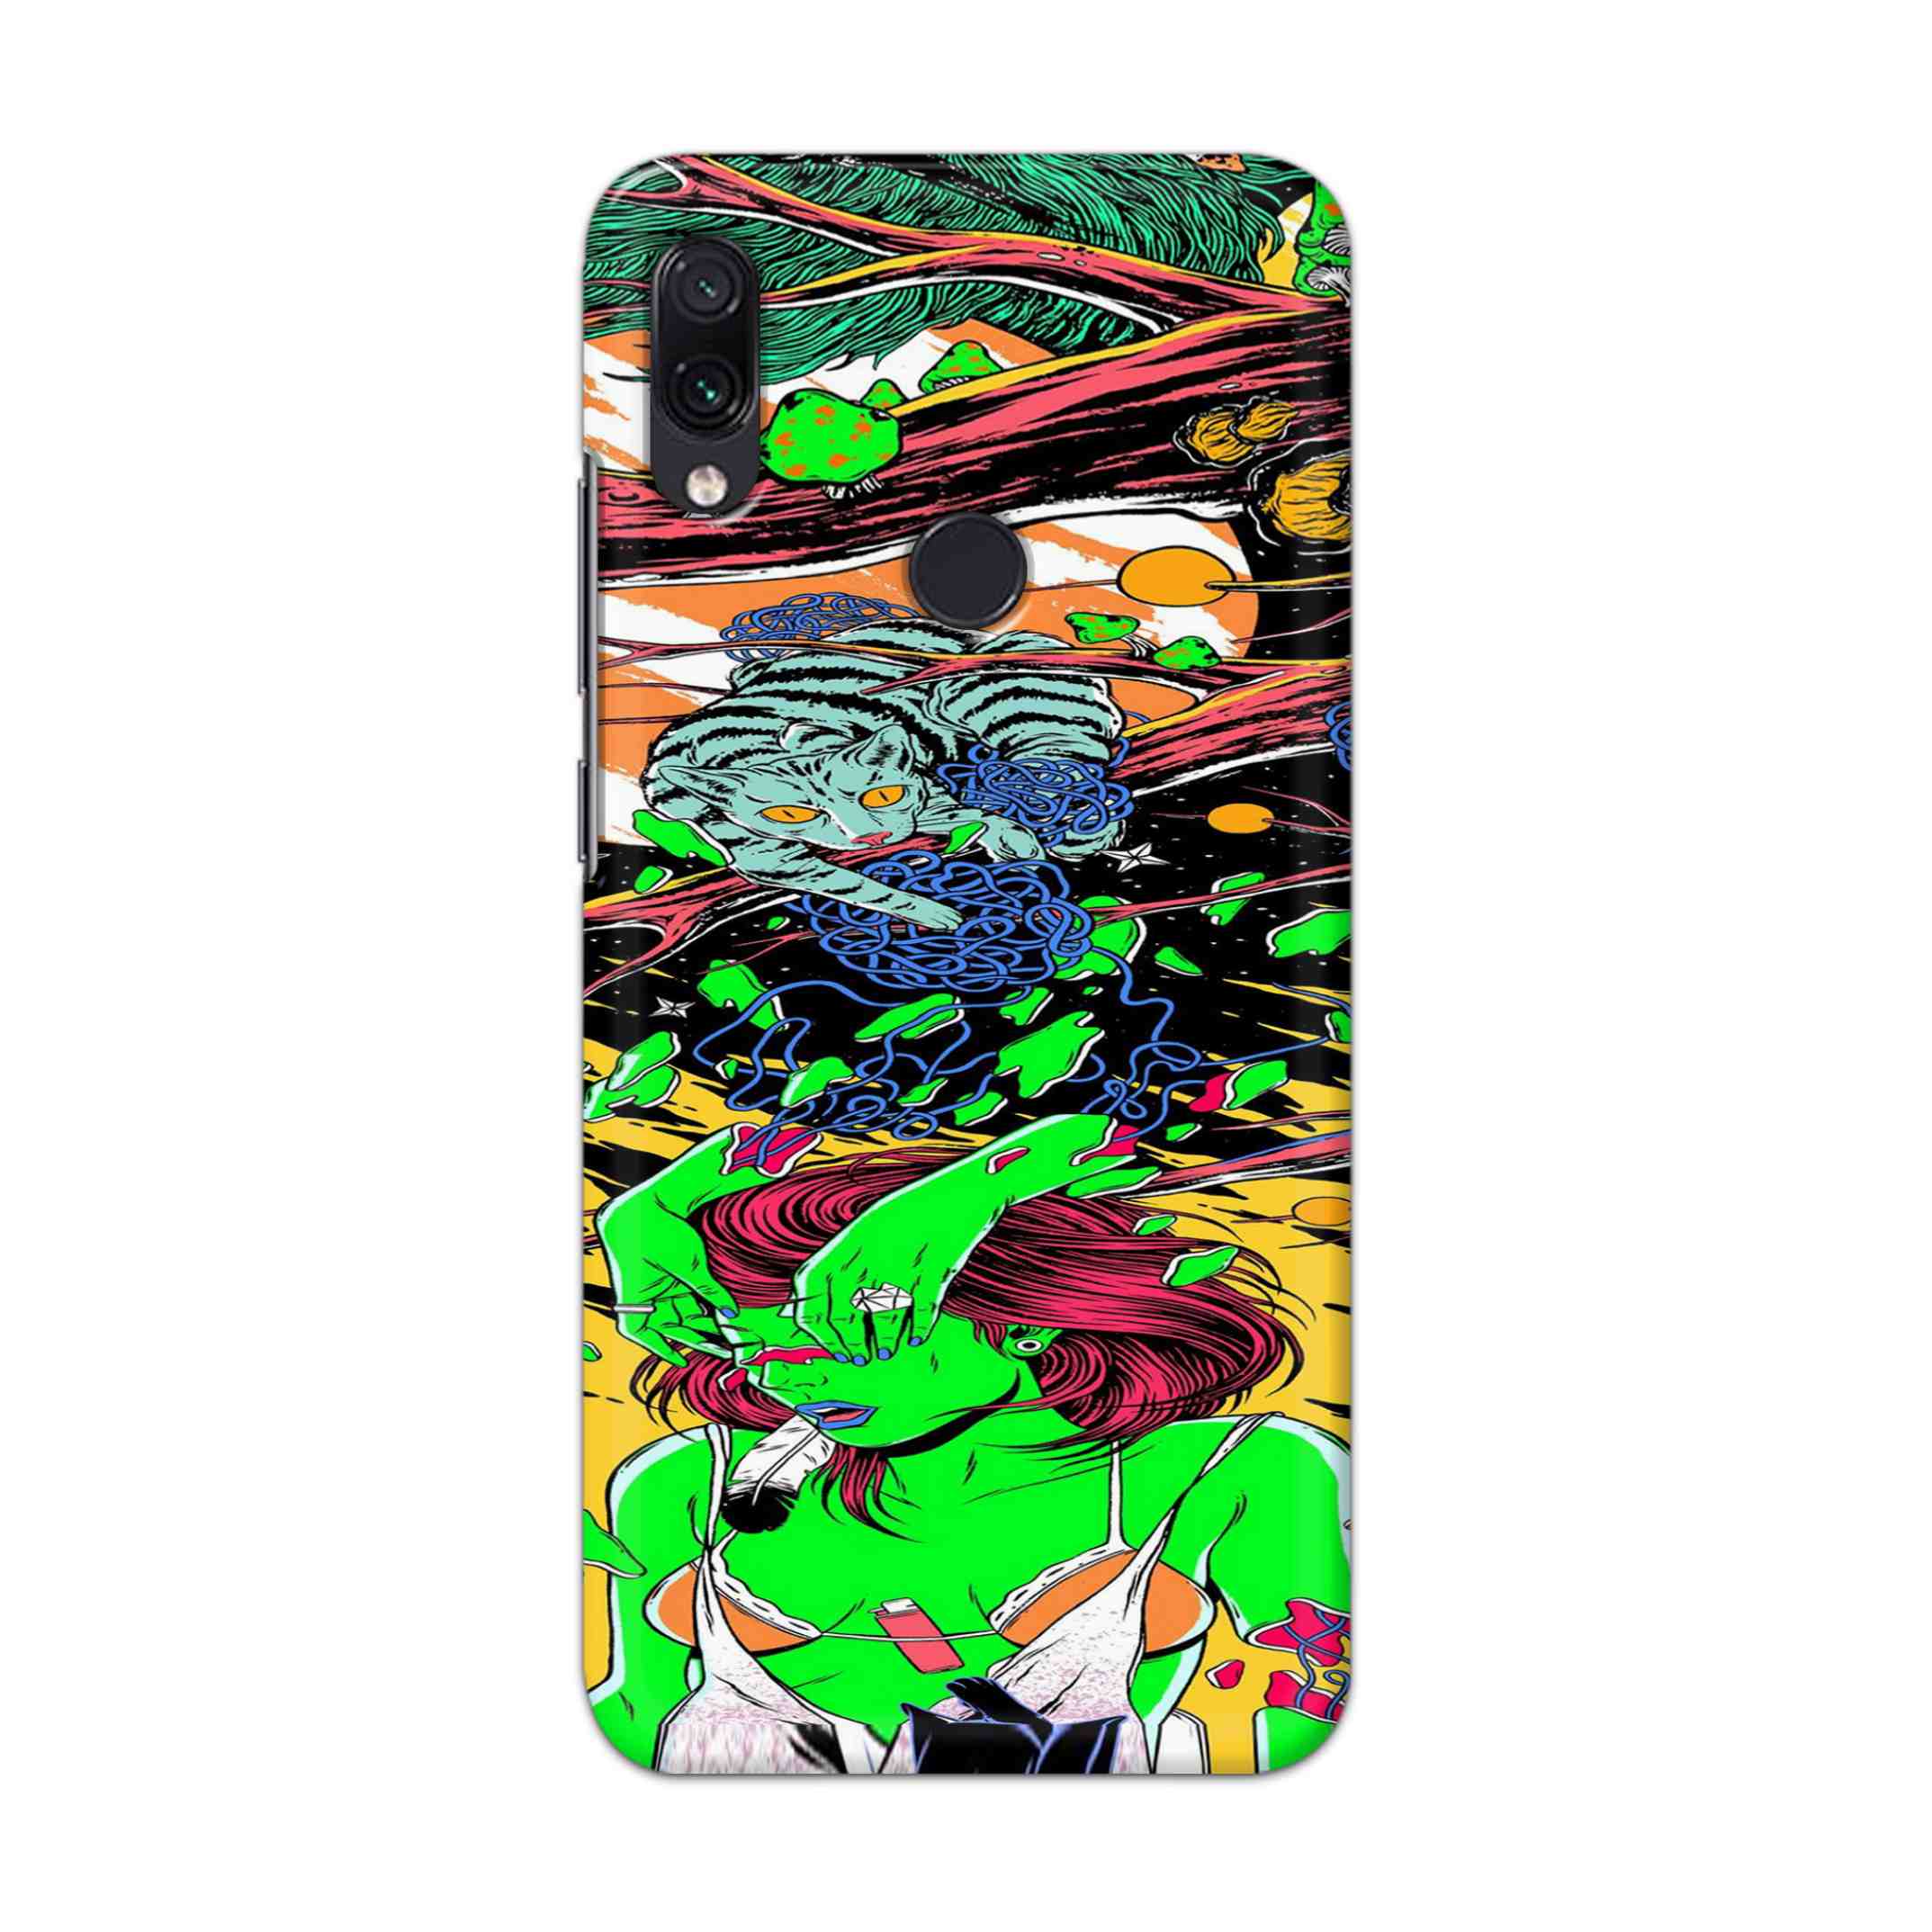 Buy Green Girl Art Hard Back Mobile Phone Case Cover For Xiaomi Redmi 7 Online